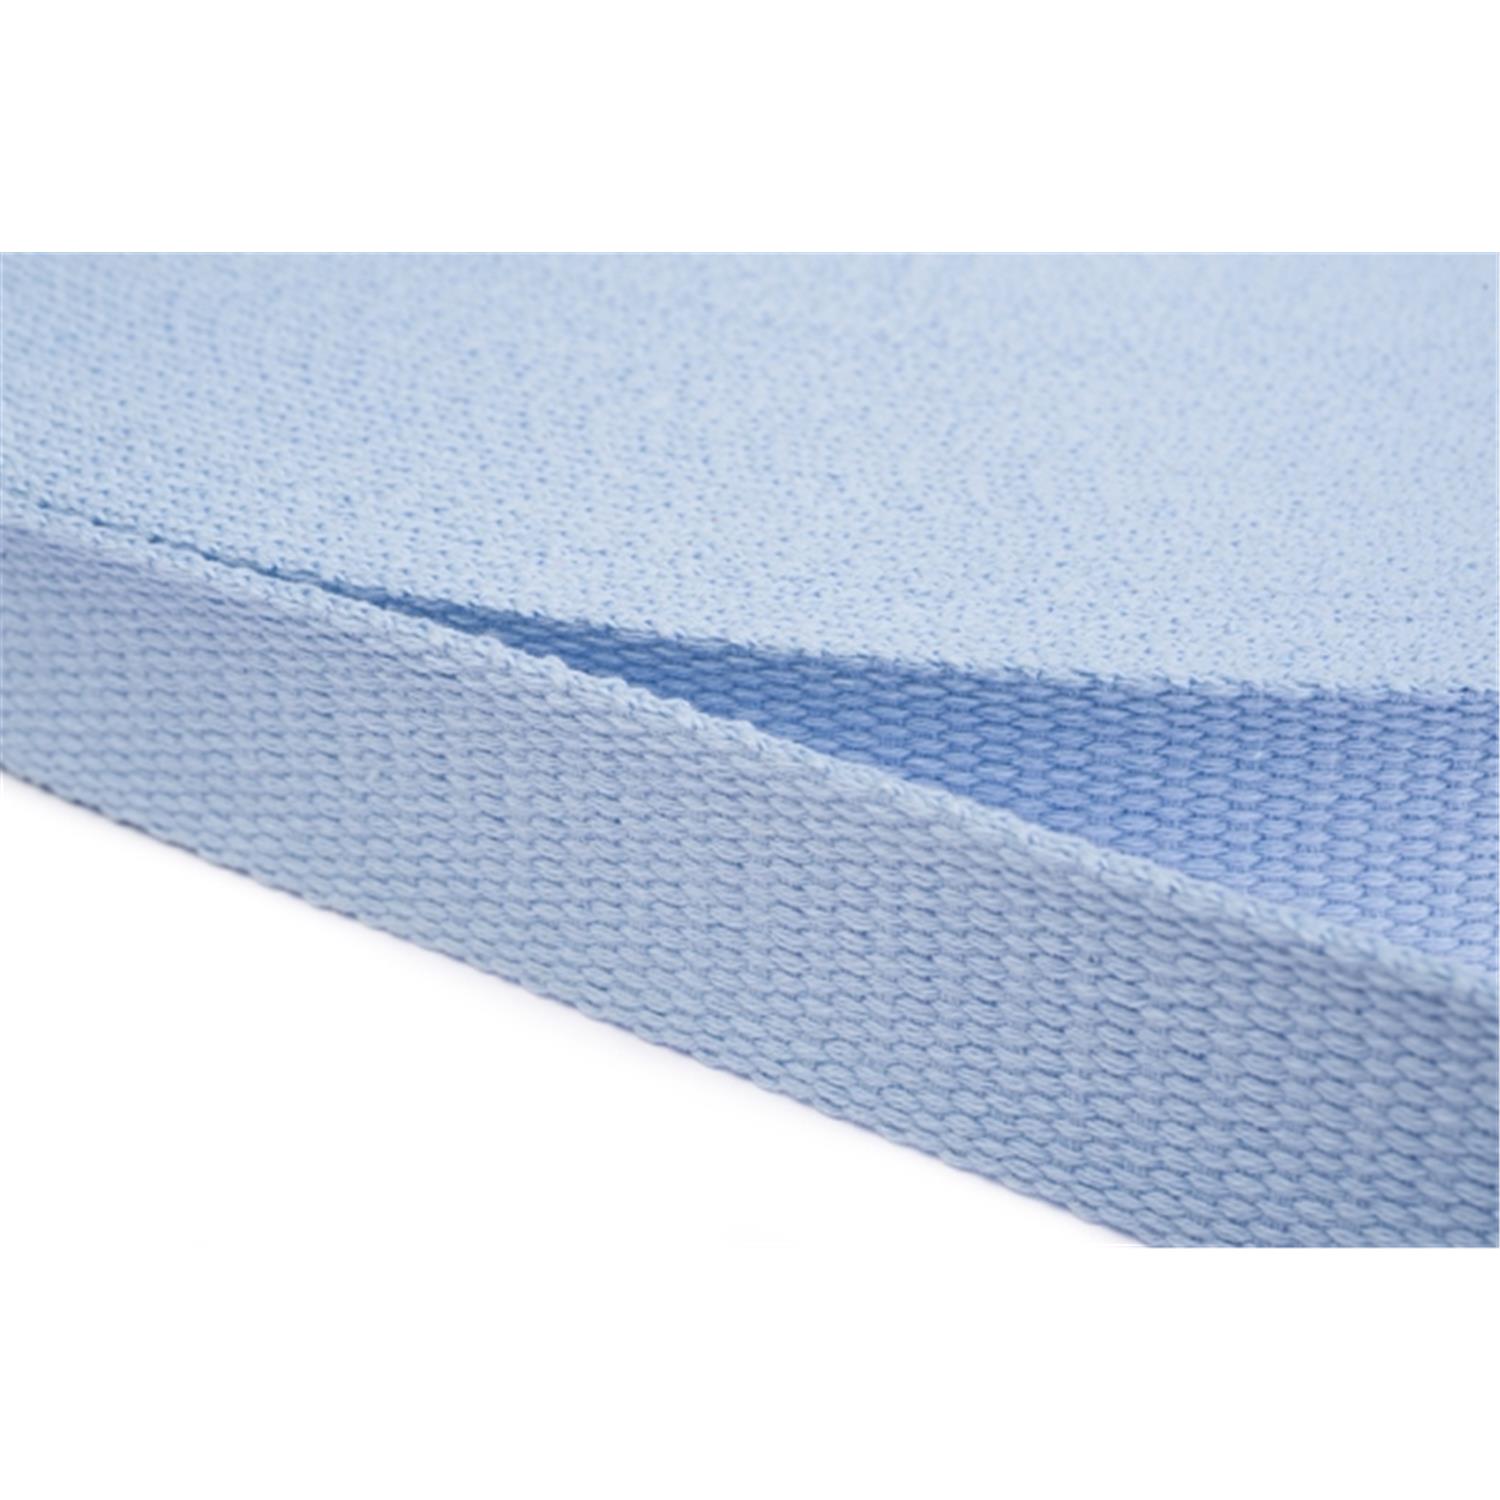 Gurtband aus Baumwolle 20mm in 20 Farben 11 - hellblau 6 Meter